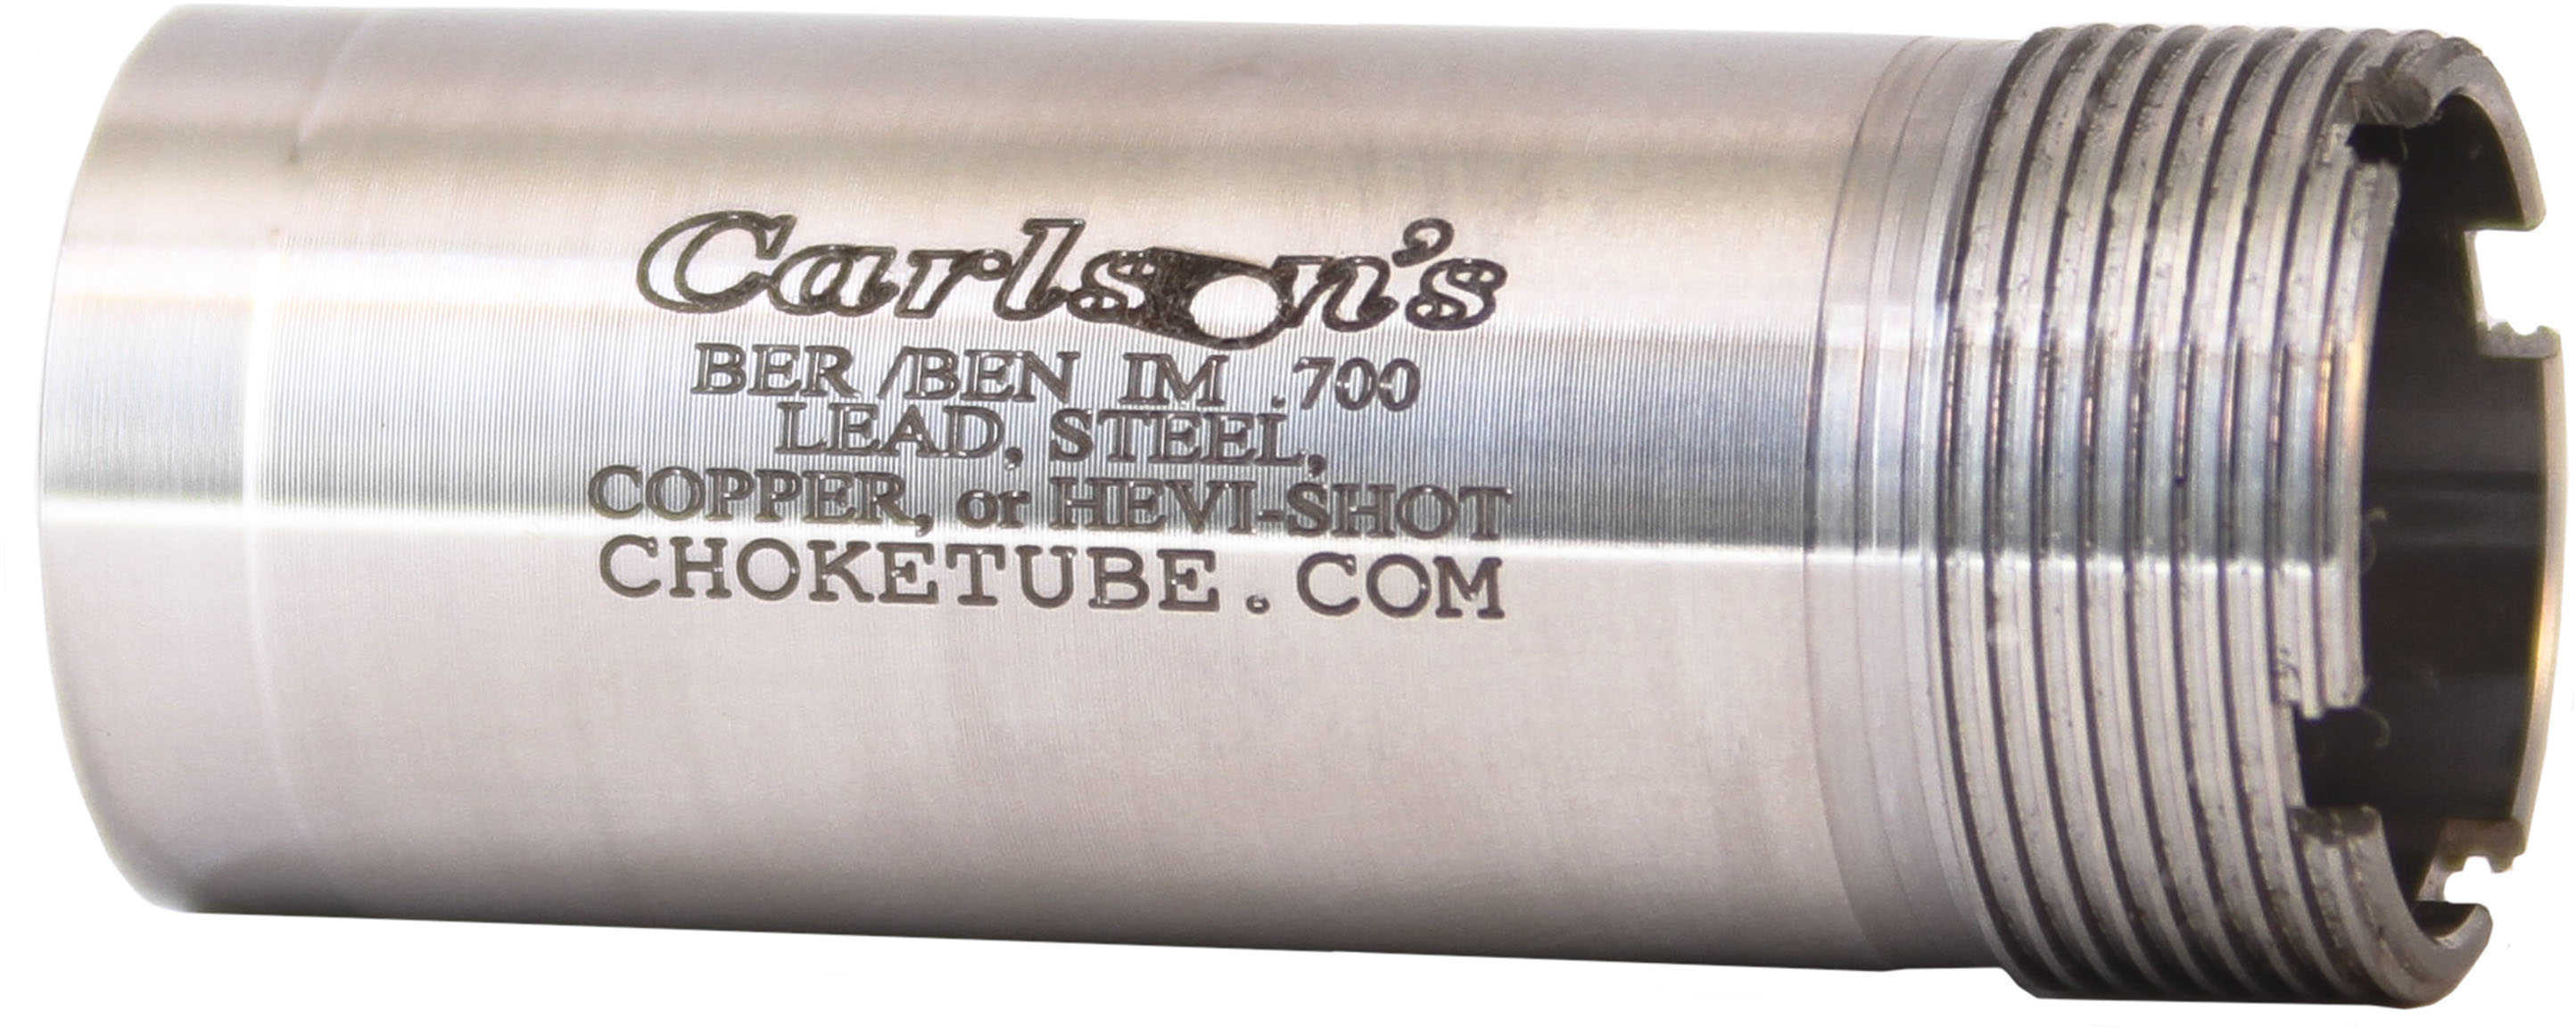 Carlsons Beretta/Benelli Mobil Flush Choke Tube 12 Gauge, Improved Modified Md: 56615